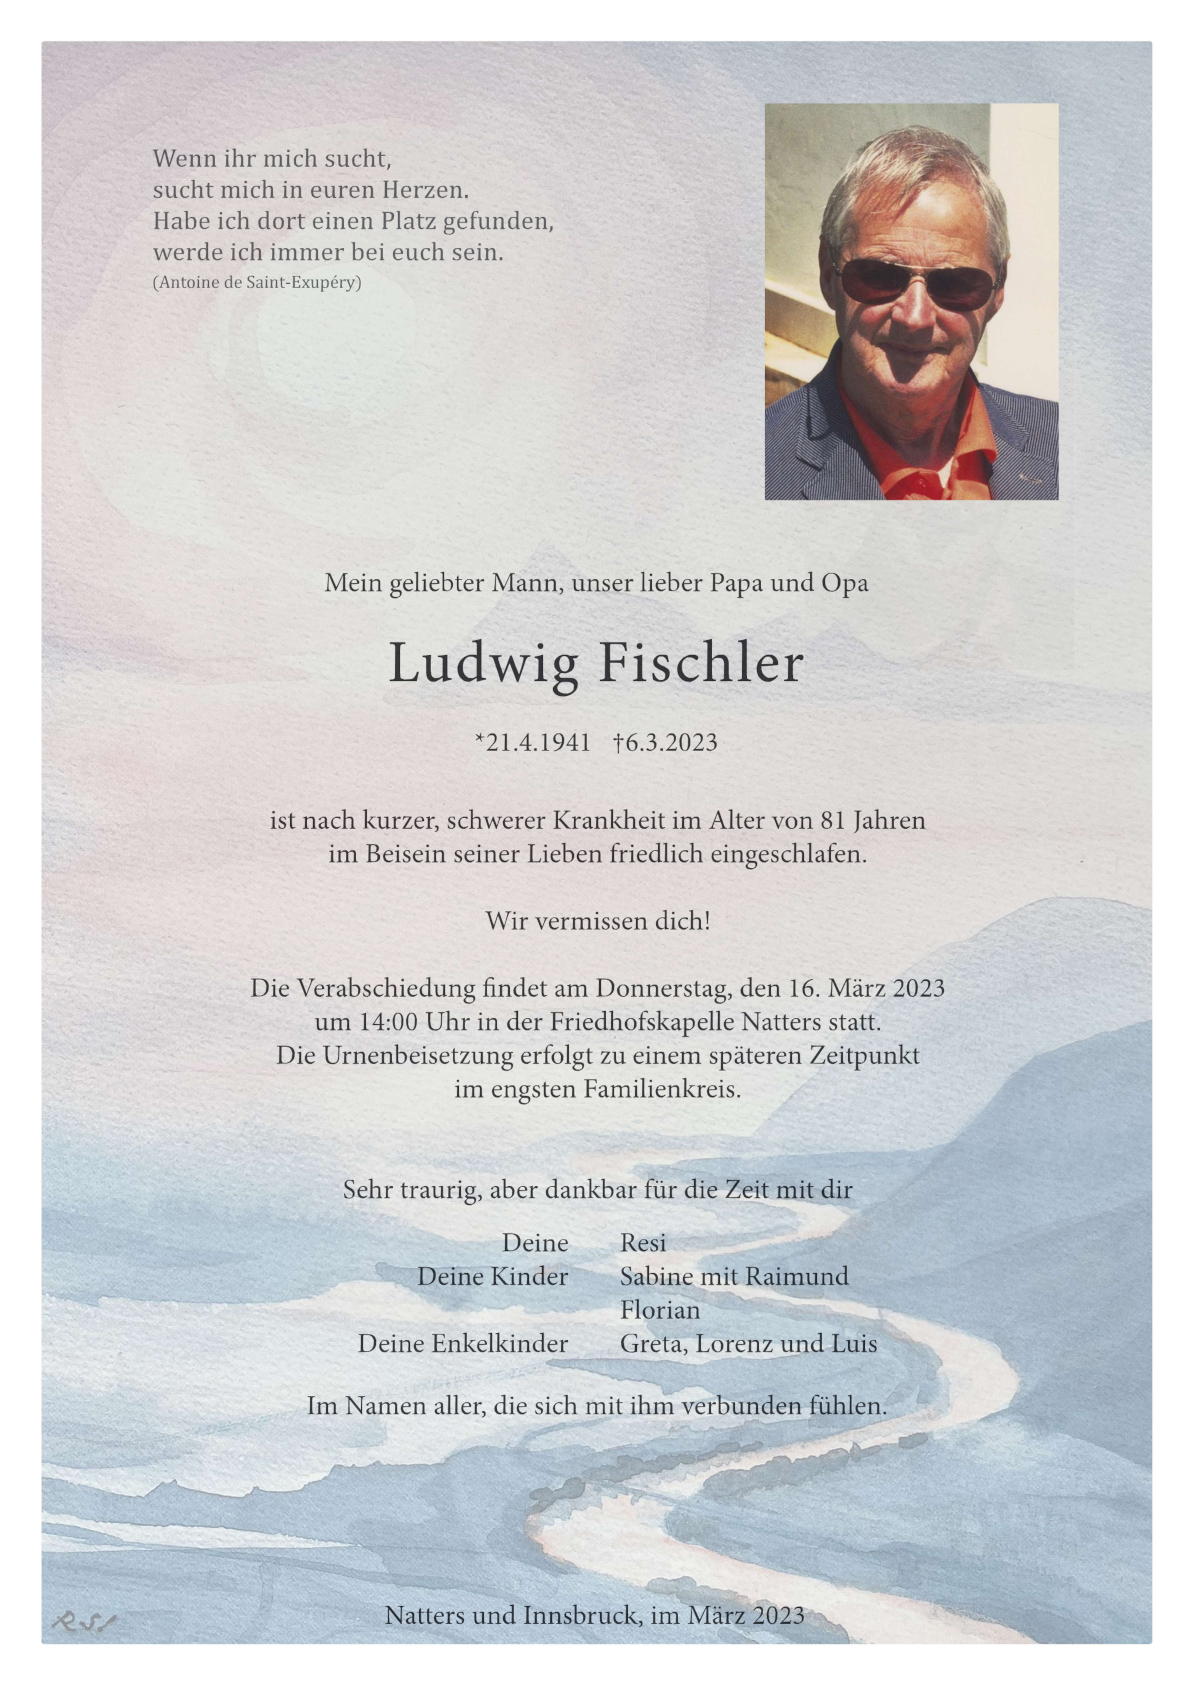 Ludwig Fischler